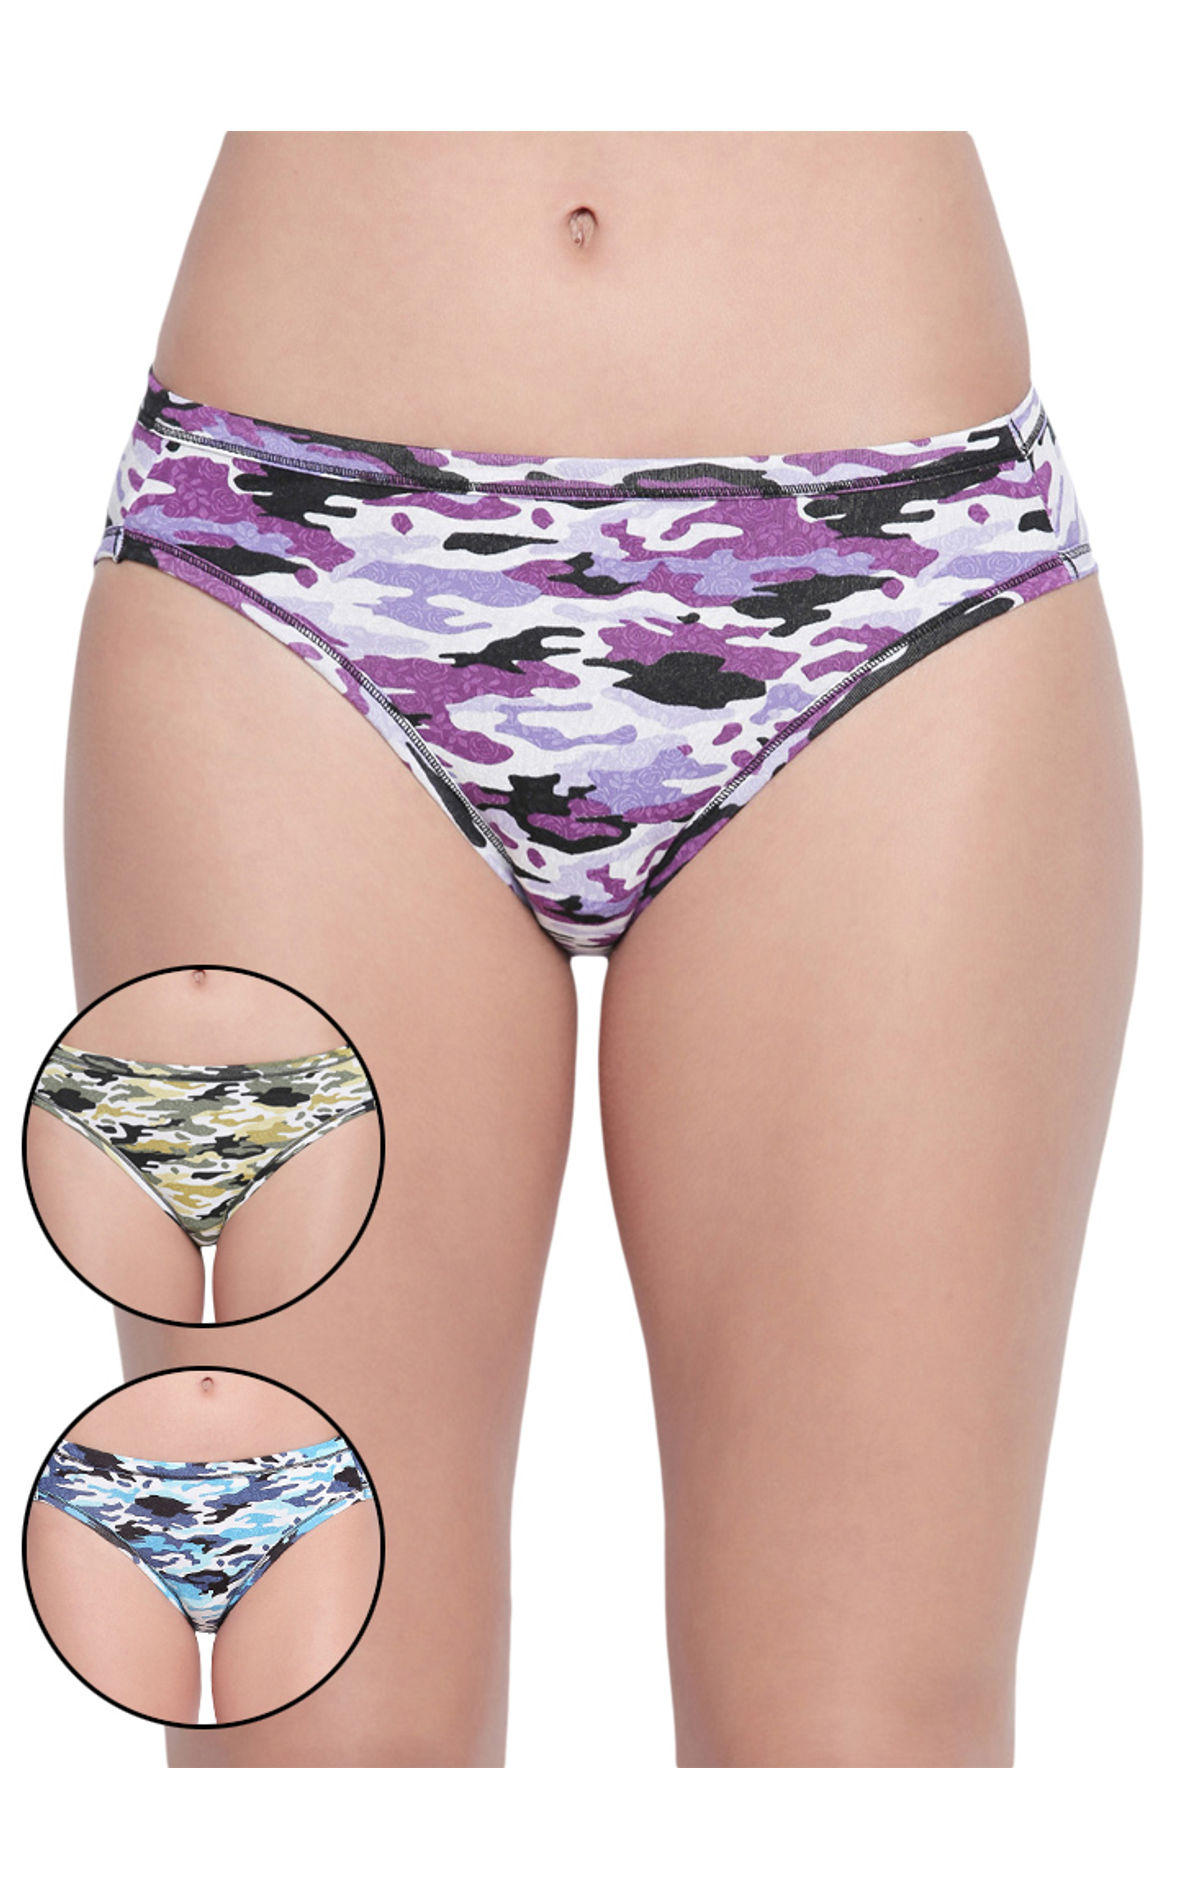 Bodycare Pack Of 3 Premium Printed Bikini Briefs In Assorted Color